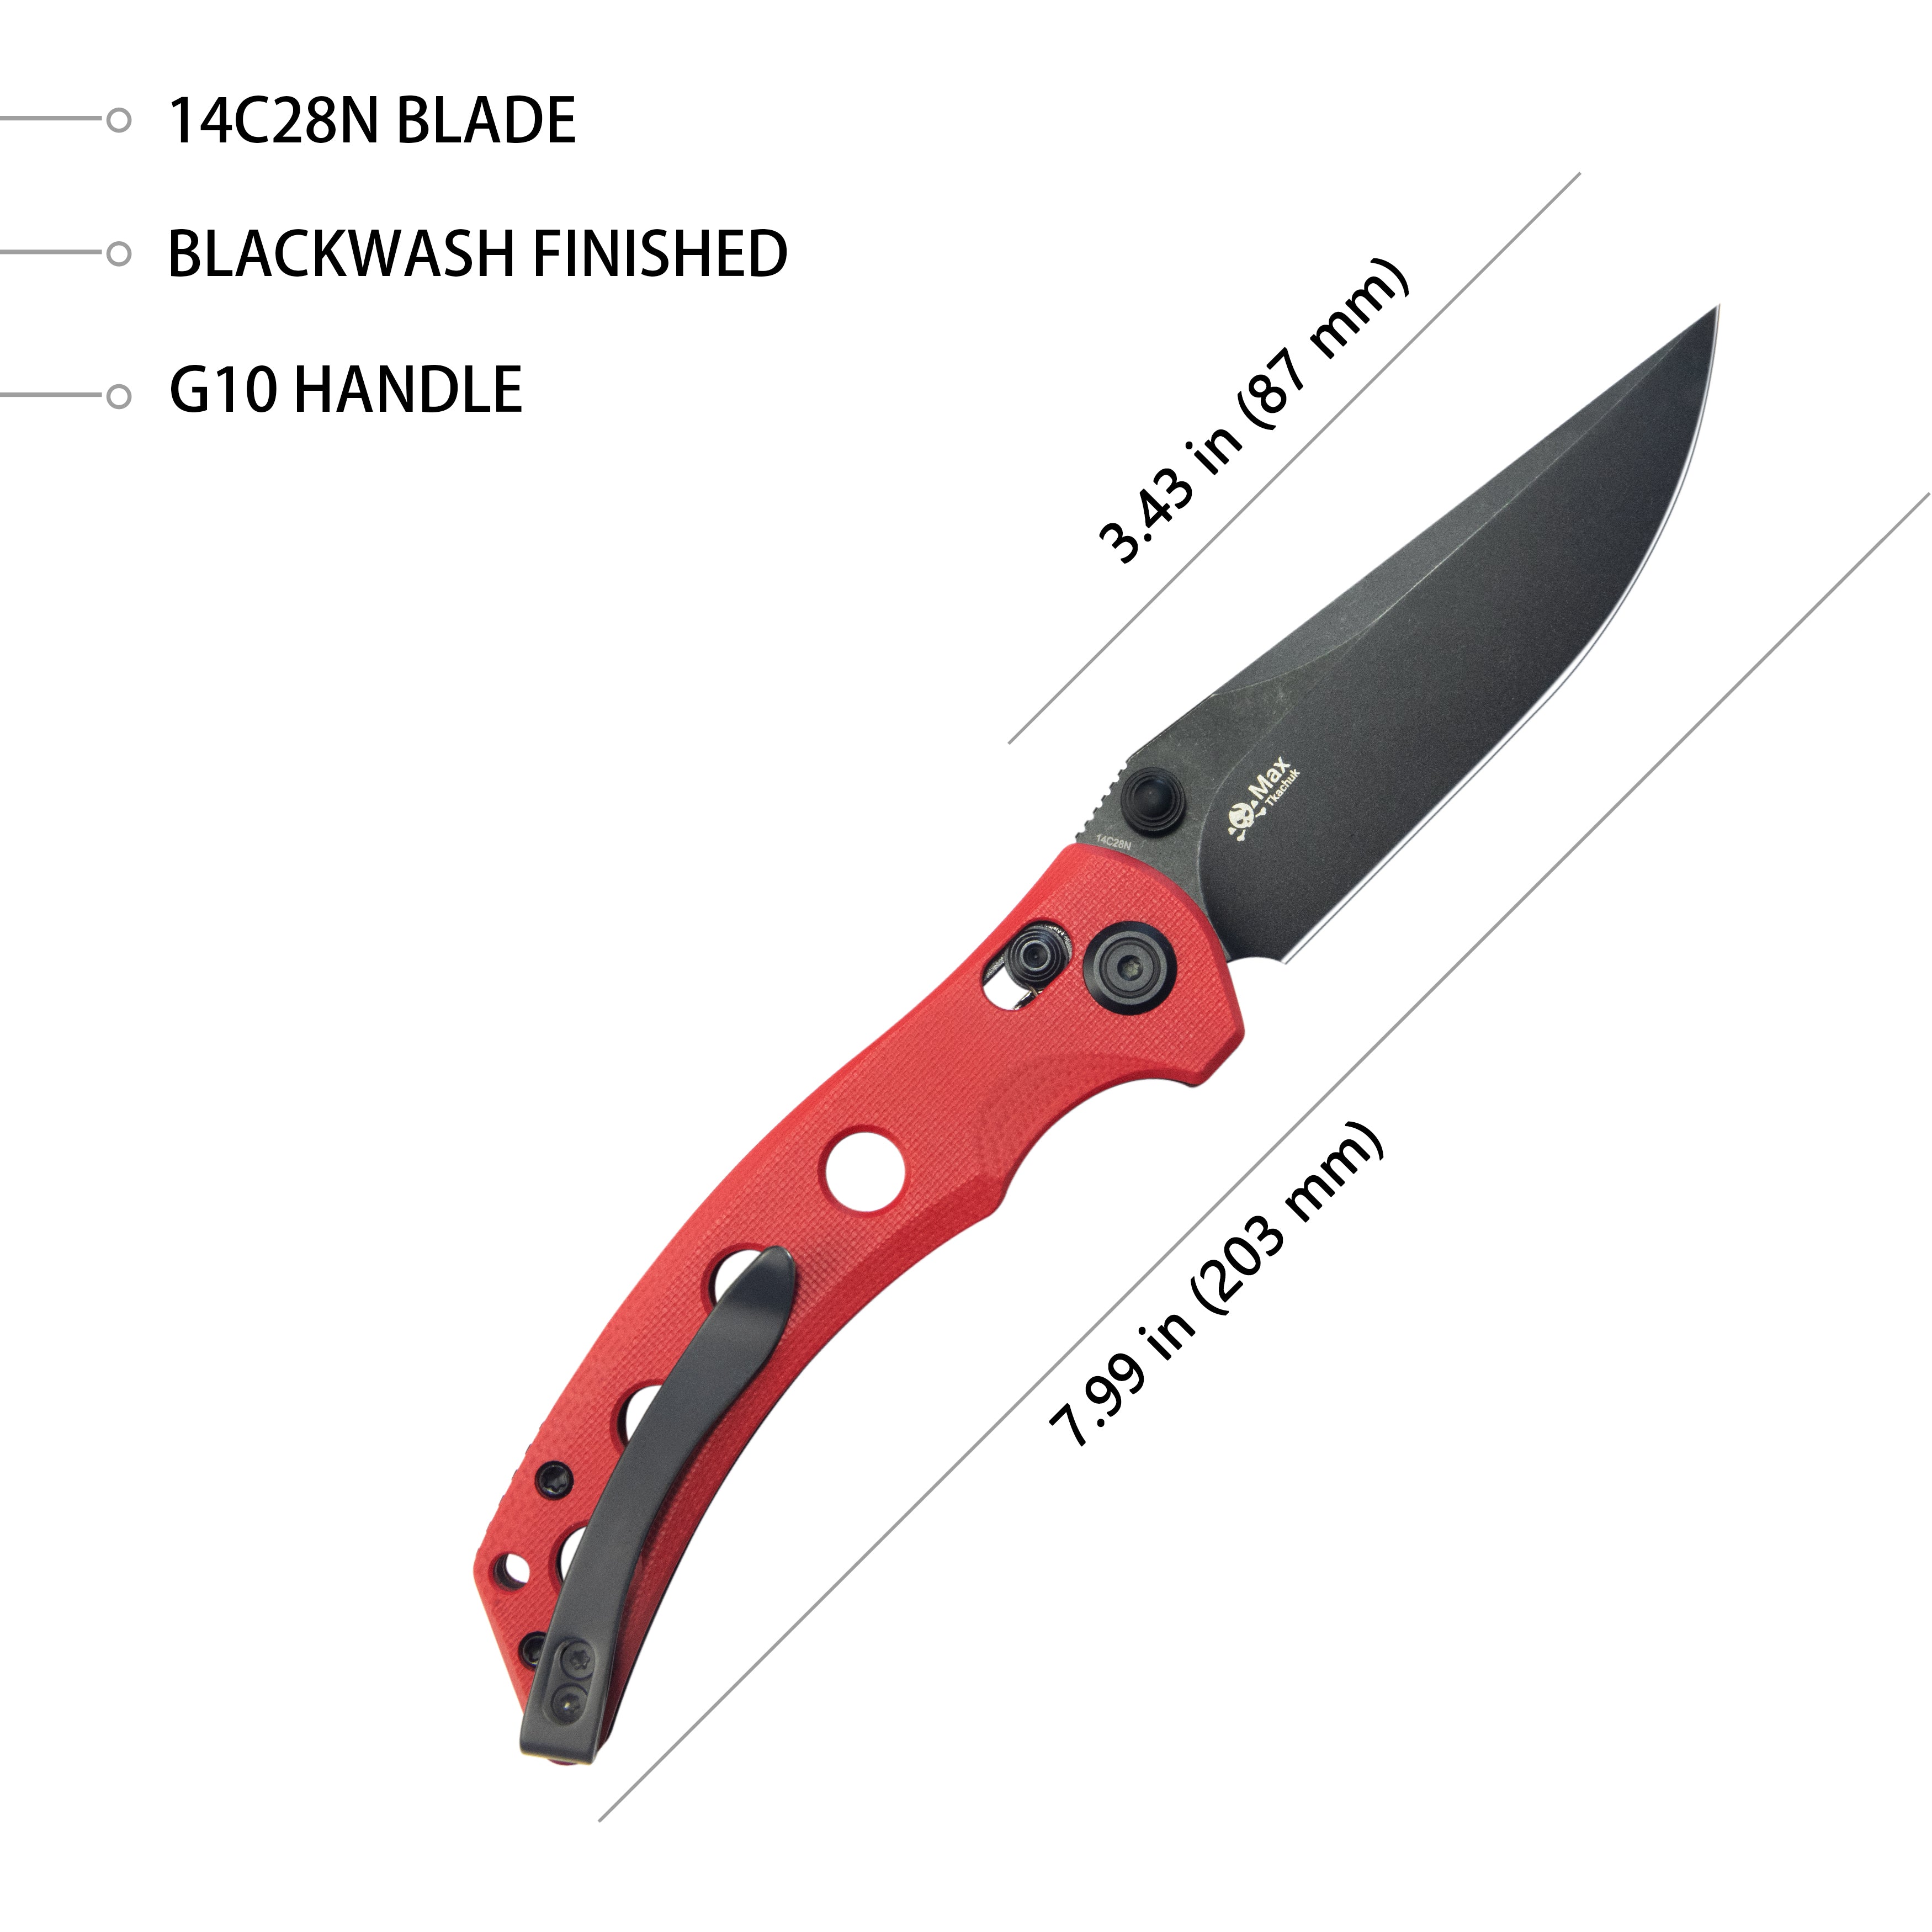 Hound Crossbar Lock Folding Pocket Knife Red G-10 Handle 3.43" Blackwash 14C28N Blade KU172E